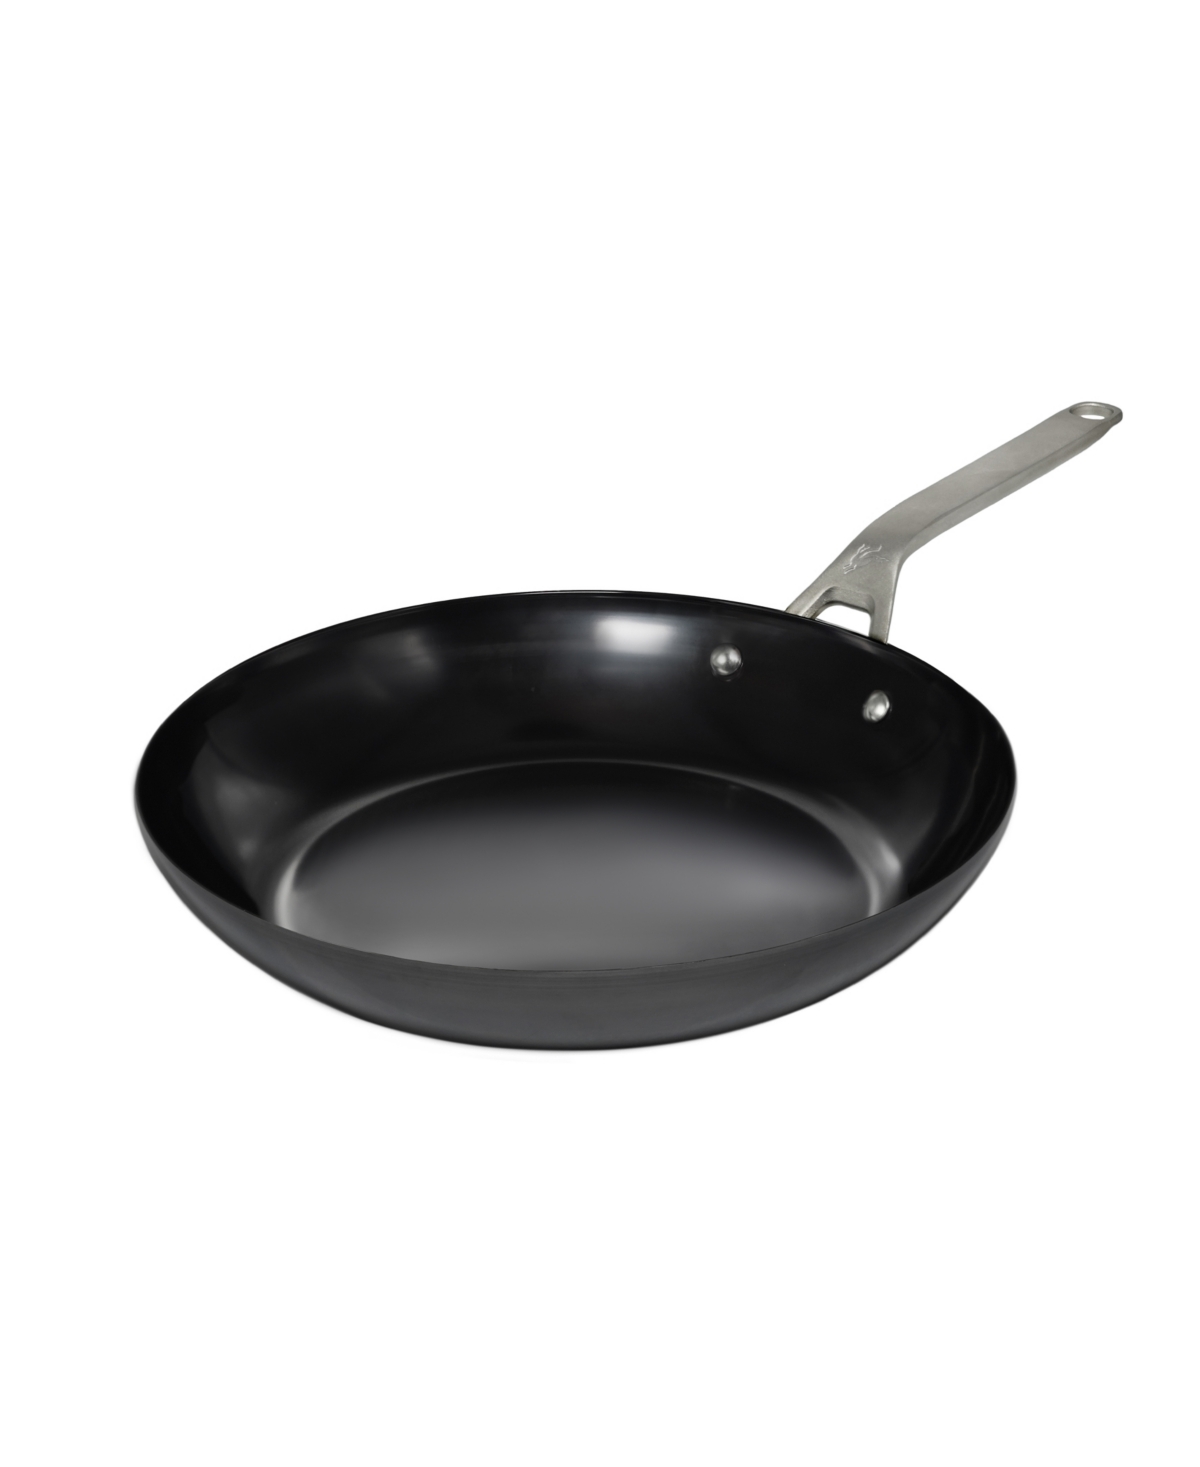 Saveur Selects Carbon Steel 12" Fry Pan In Nitri-black